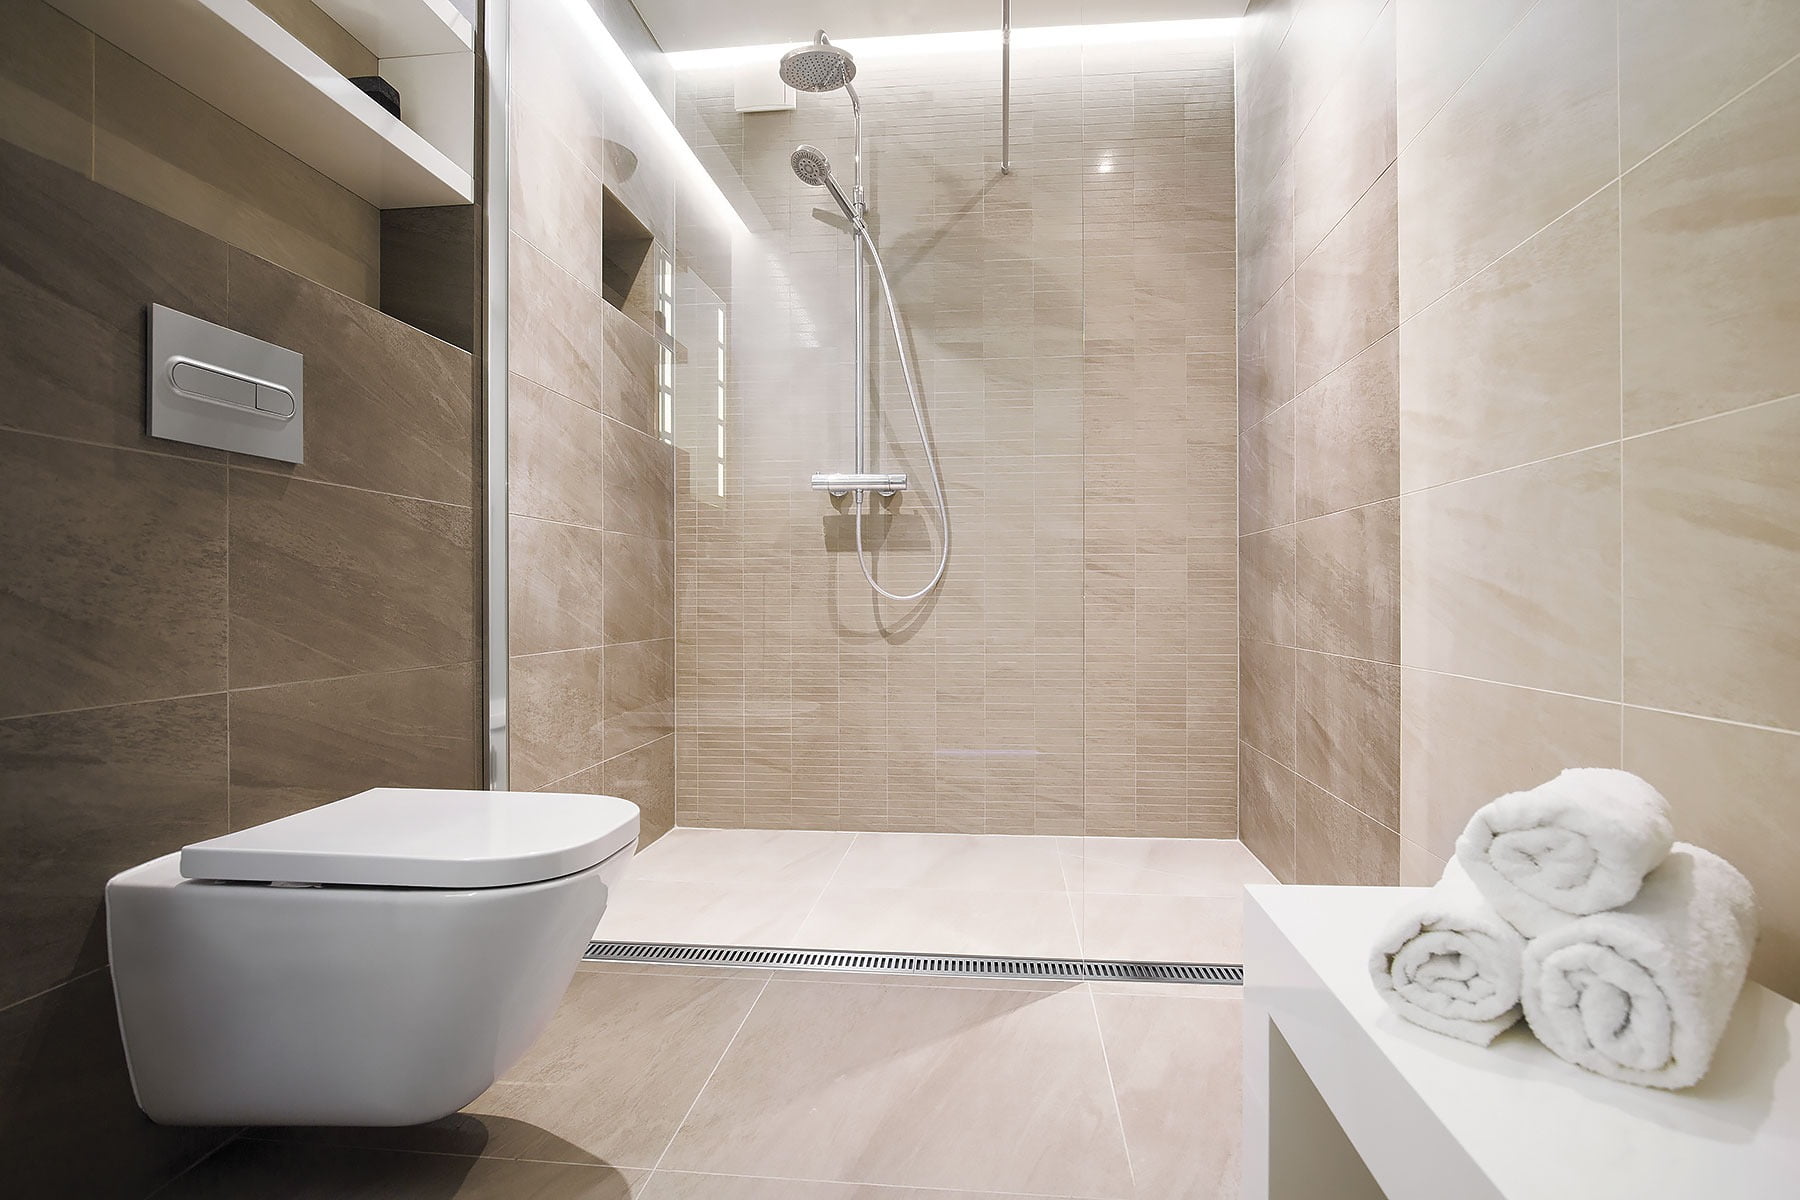 Plumbing fixture, Shower head, Bathroom sink, Interior design, Property, Tap, White, Toilet